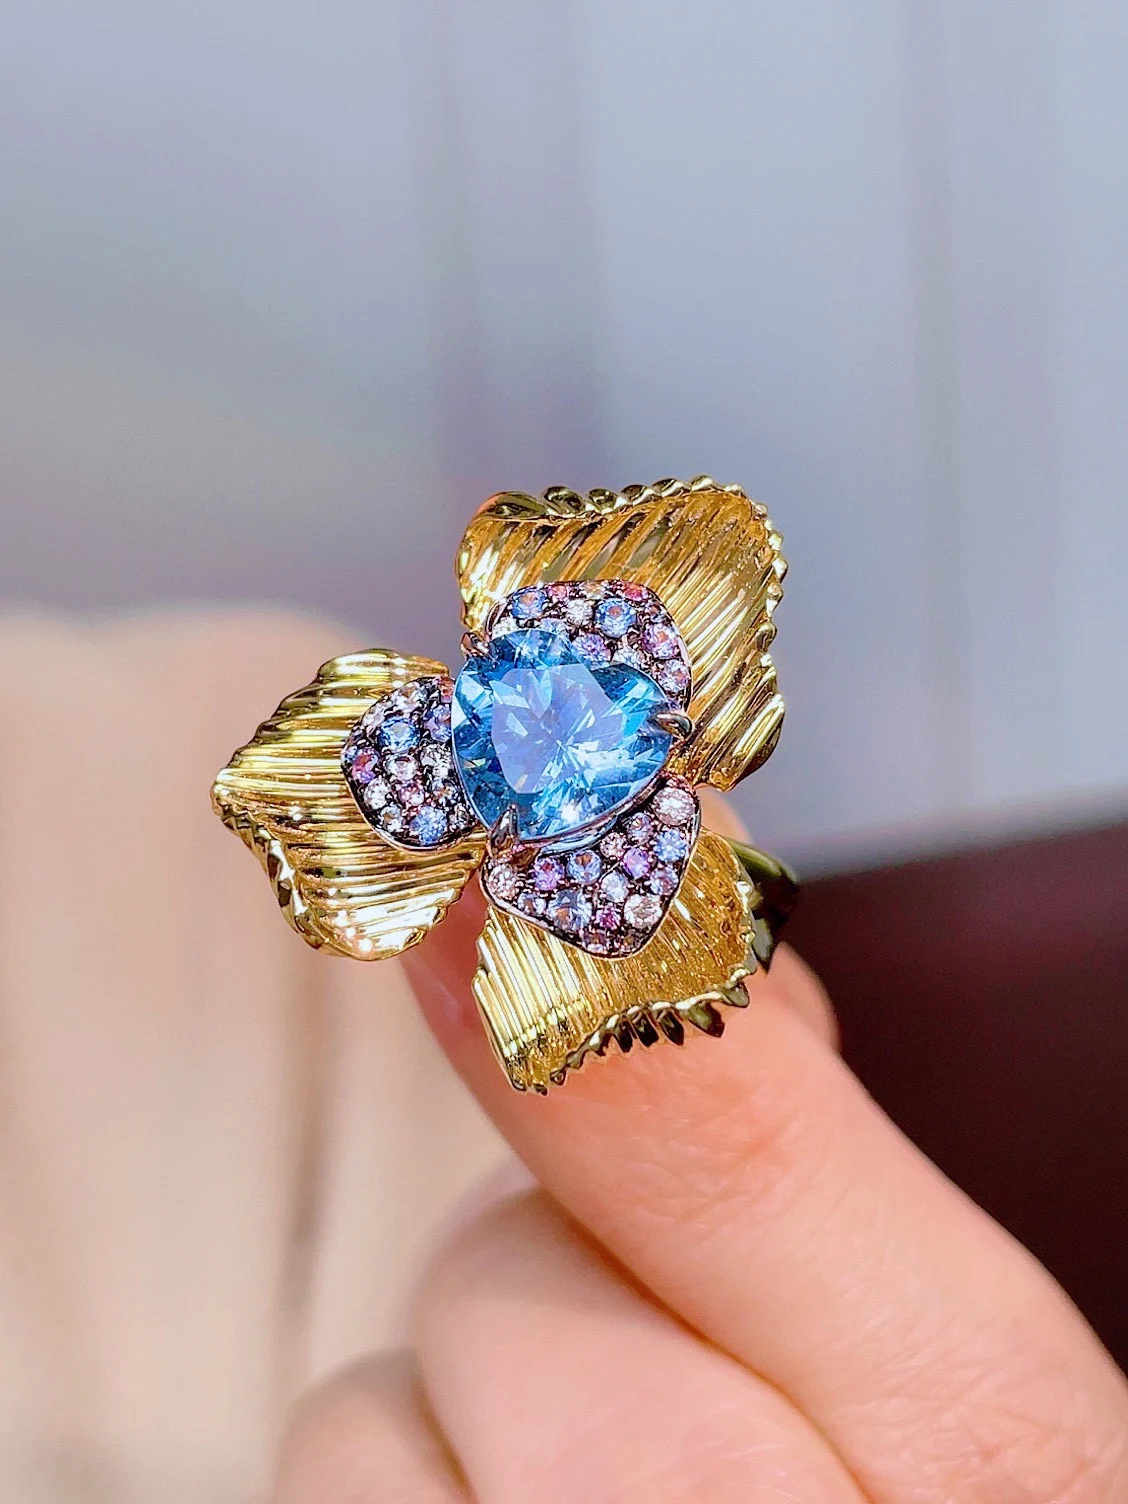 HJY תרשיש טבעת תכשיטים טהור 18K זהב טבעי 2.3ct כחול תרשיש אבני חן בסדר טבעות לנשים מתנות יום הולדת